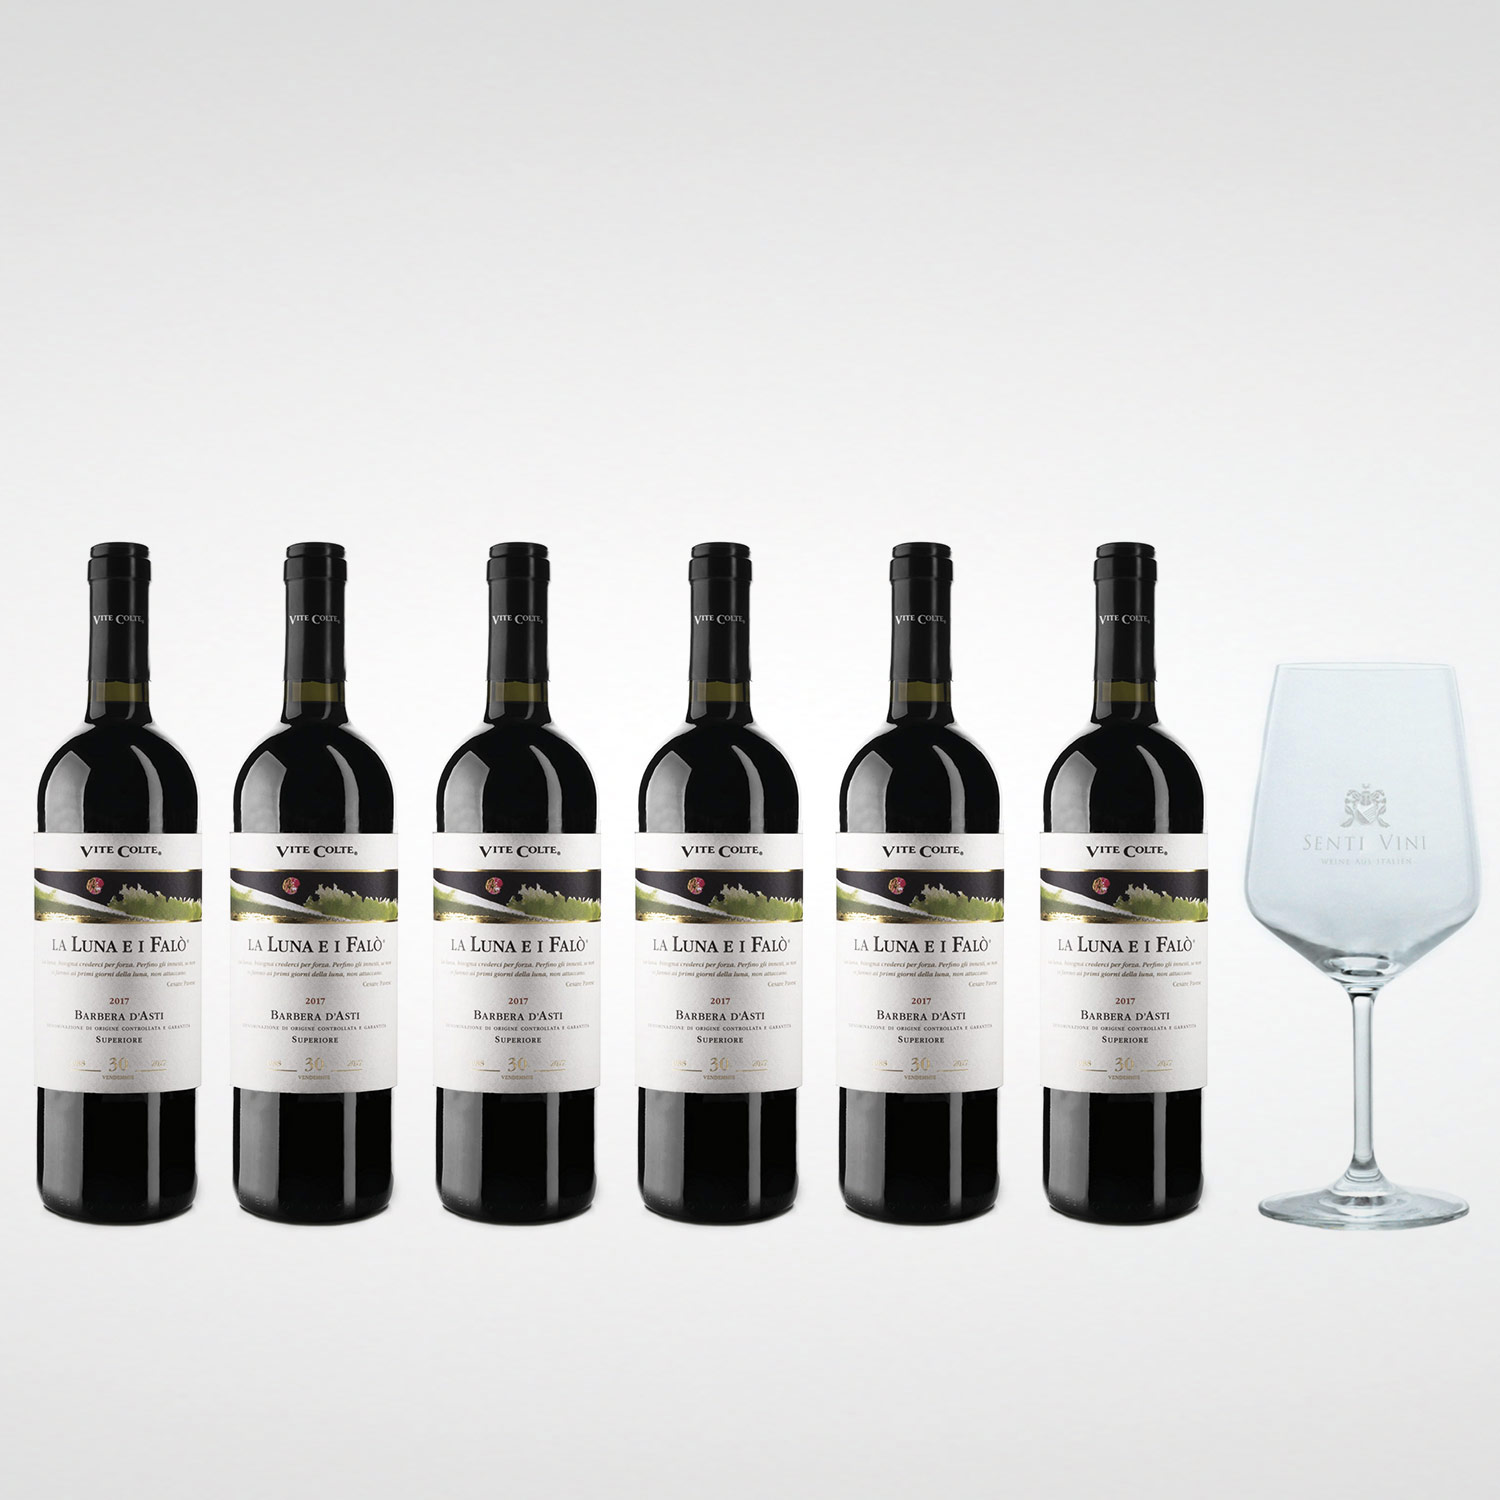 Sparpaket Vite Colte La Luna Vini kaufen Barbera bei - Weinglas aus mit Weine | Falò (6 Online e 0,75l) Spiegelau Senti Italien x Senti d´Asti Vini i DOCG 2021